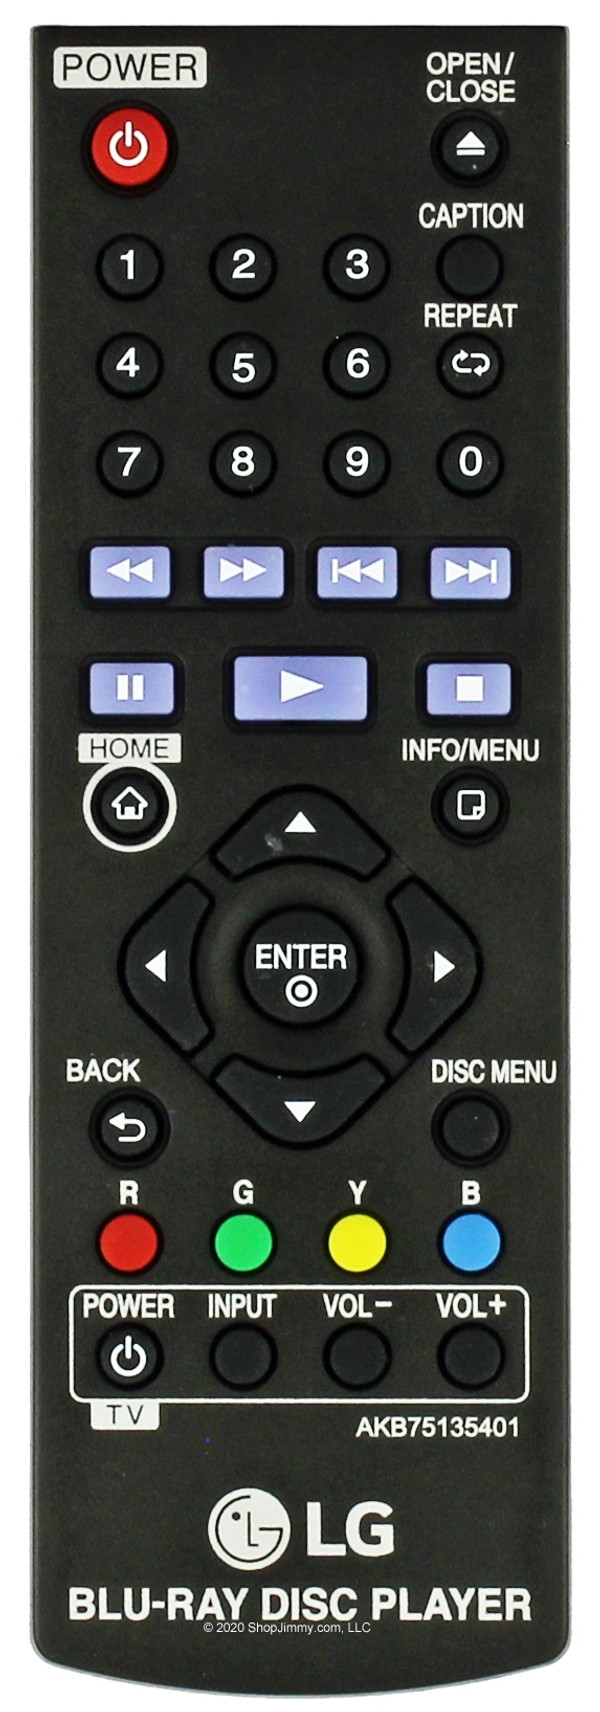 LG AKB75135401 Blu-Ray Disc Player Remote Control--NEW